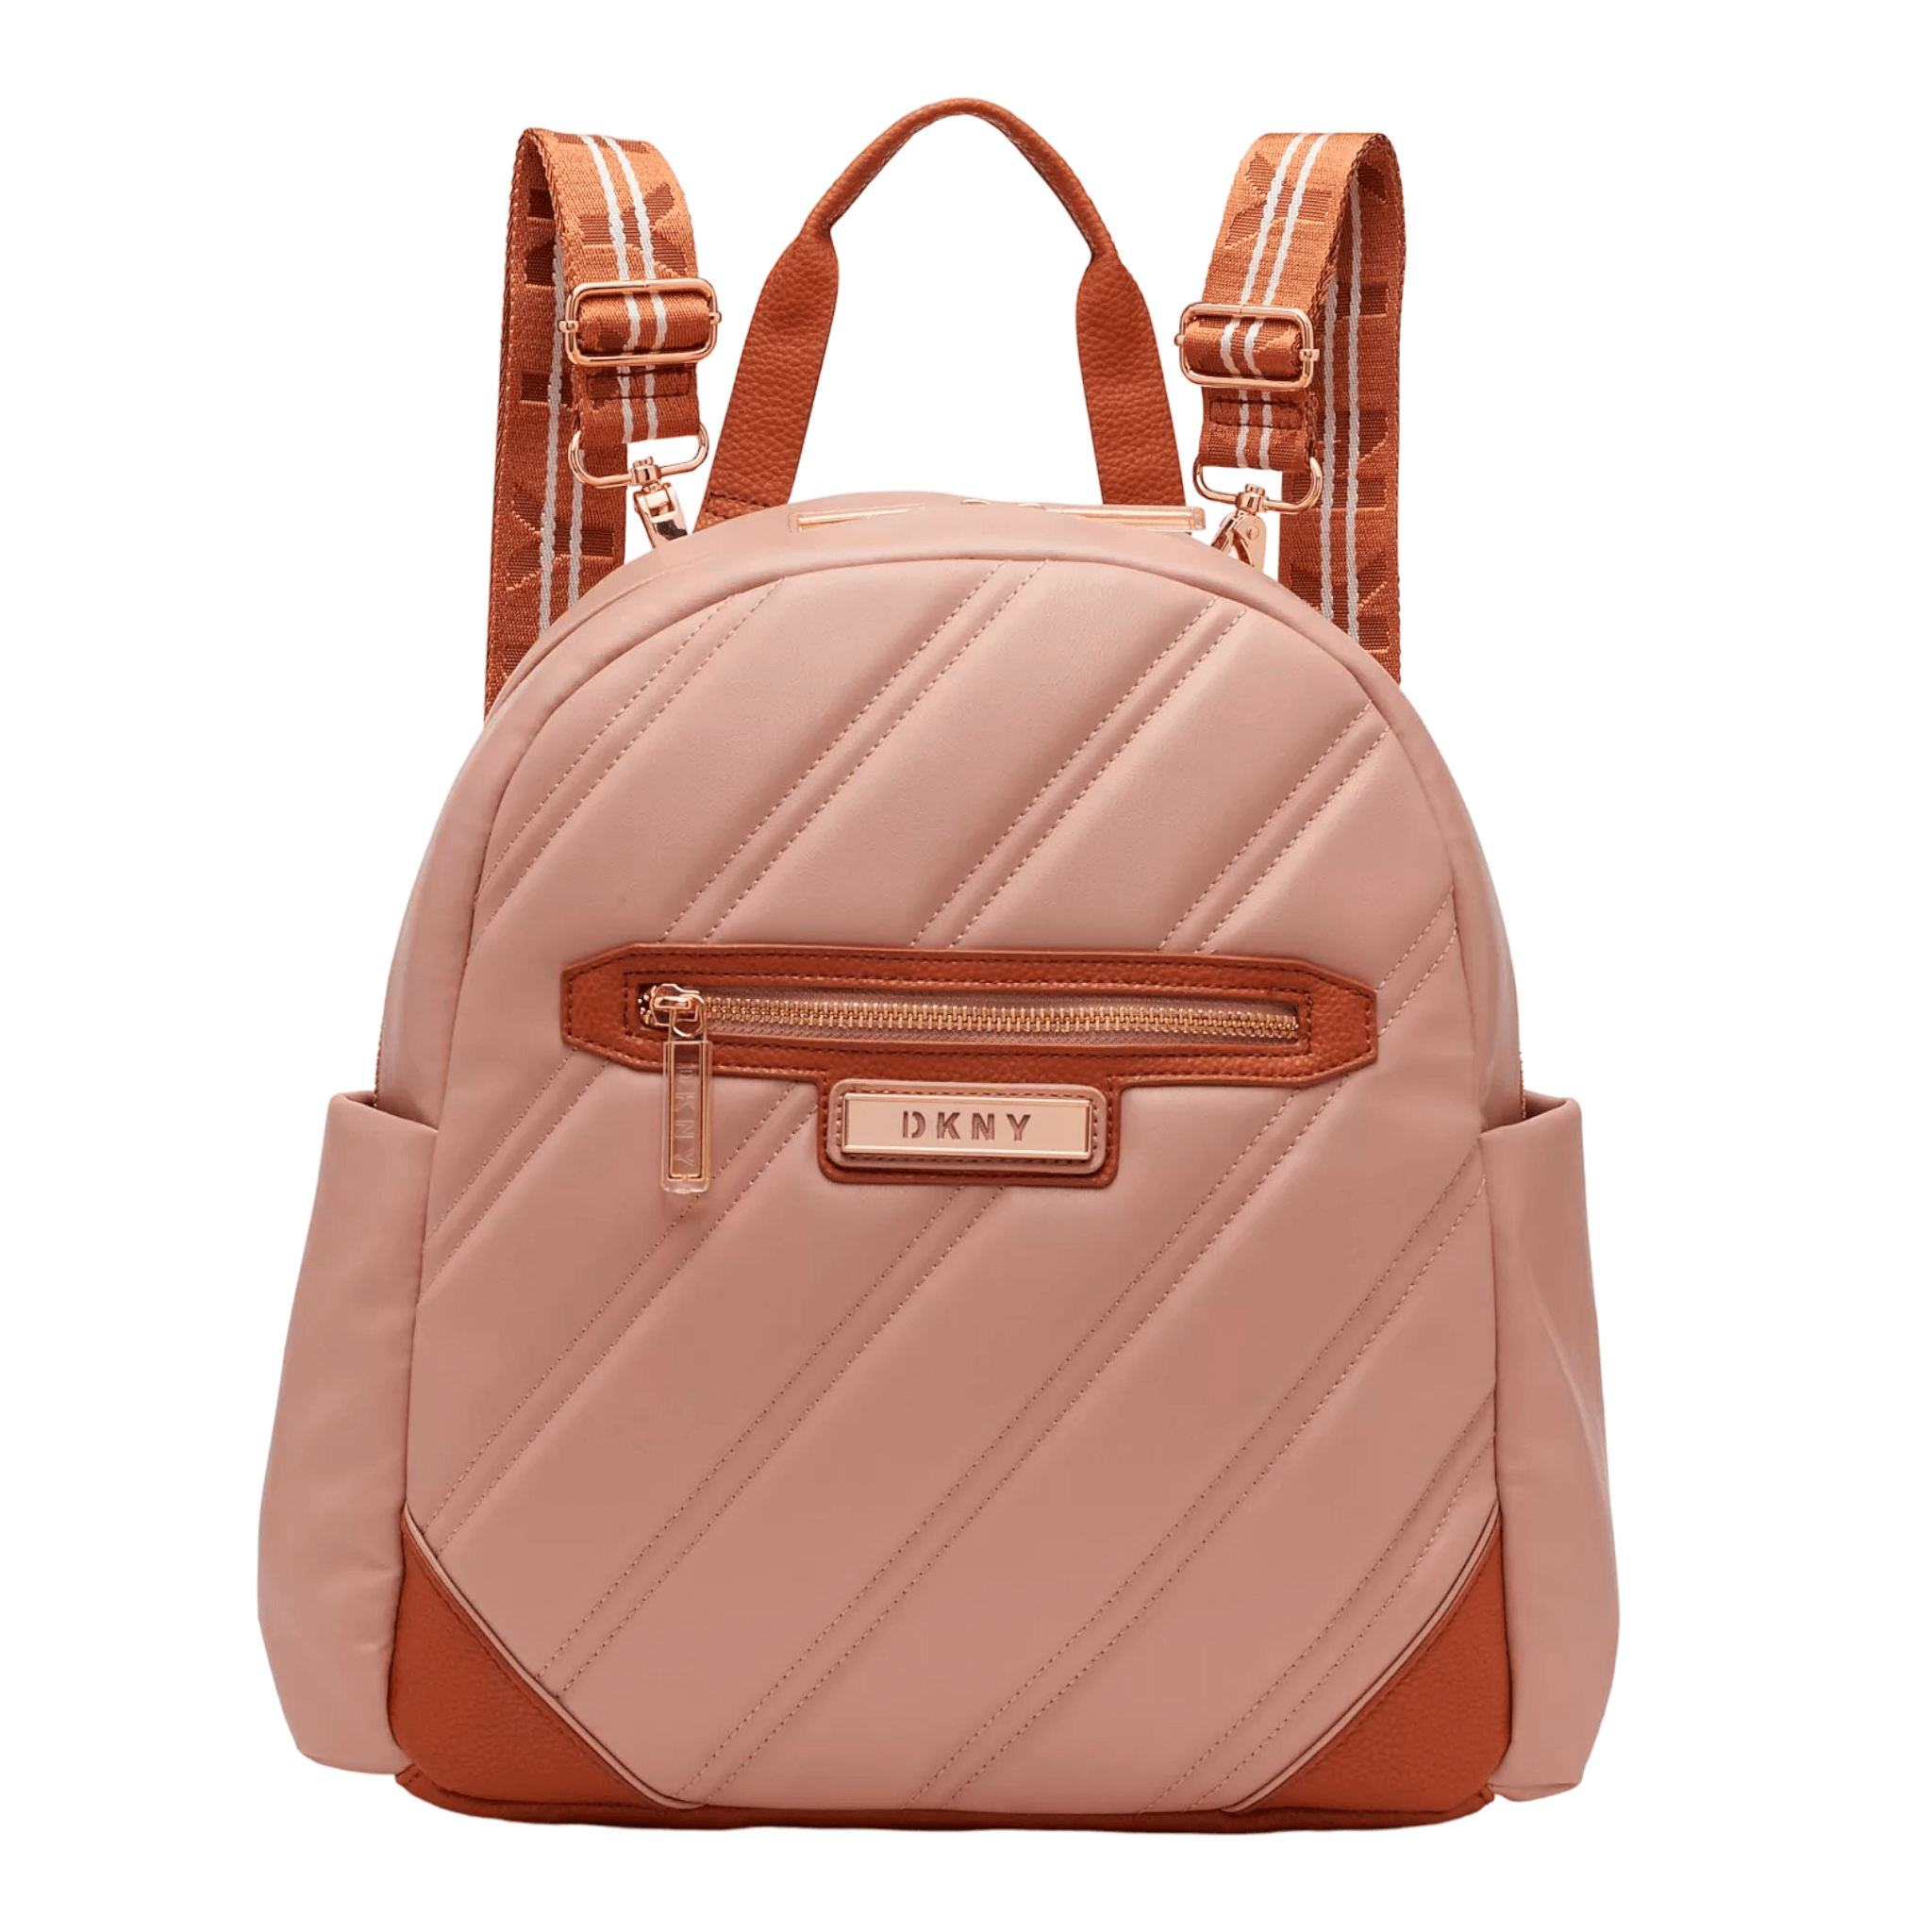 Рюкзак Dkny Bias 15 Carry-On, темно-розовый/коричневый